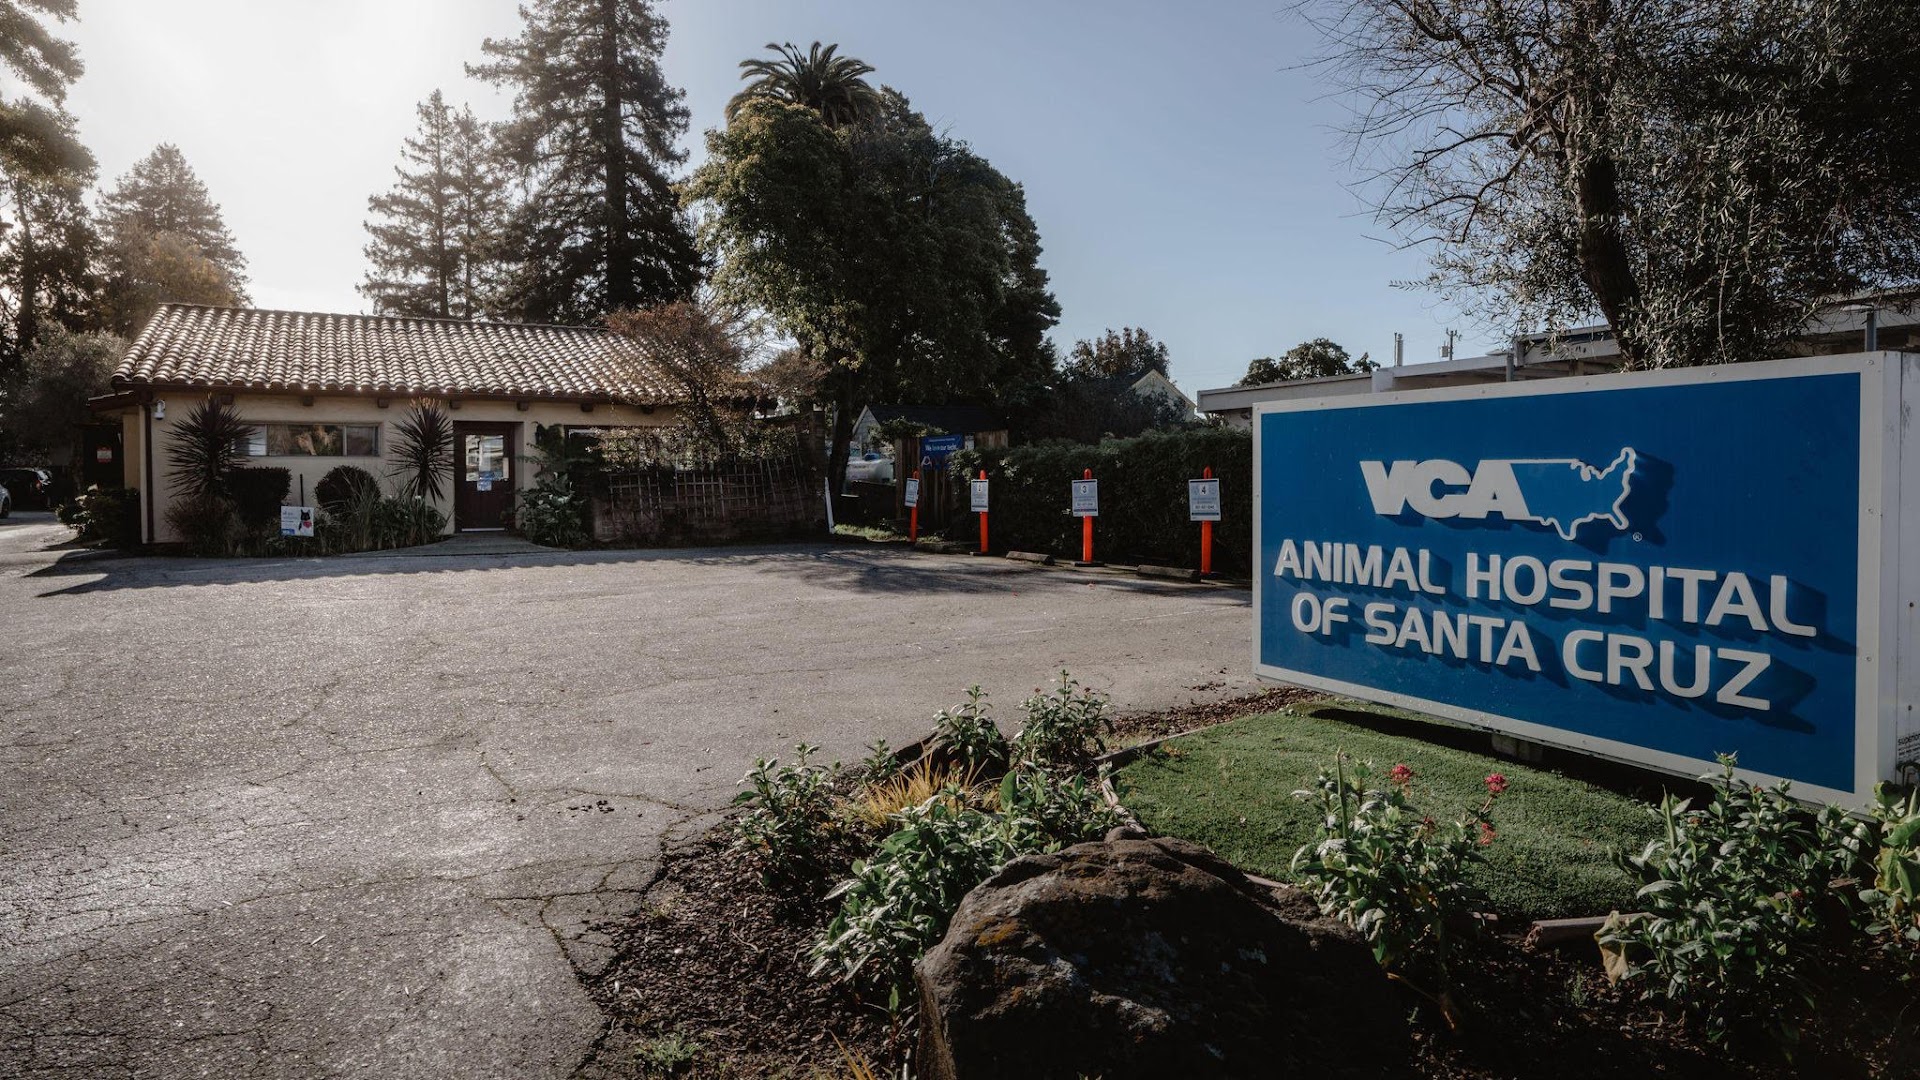 VCA Animal Hospital of Santa Cruz